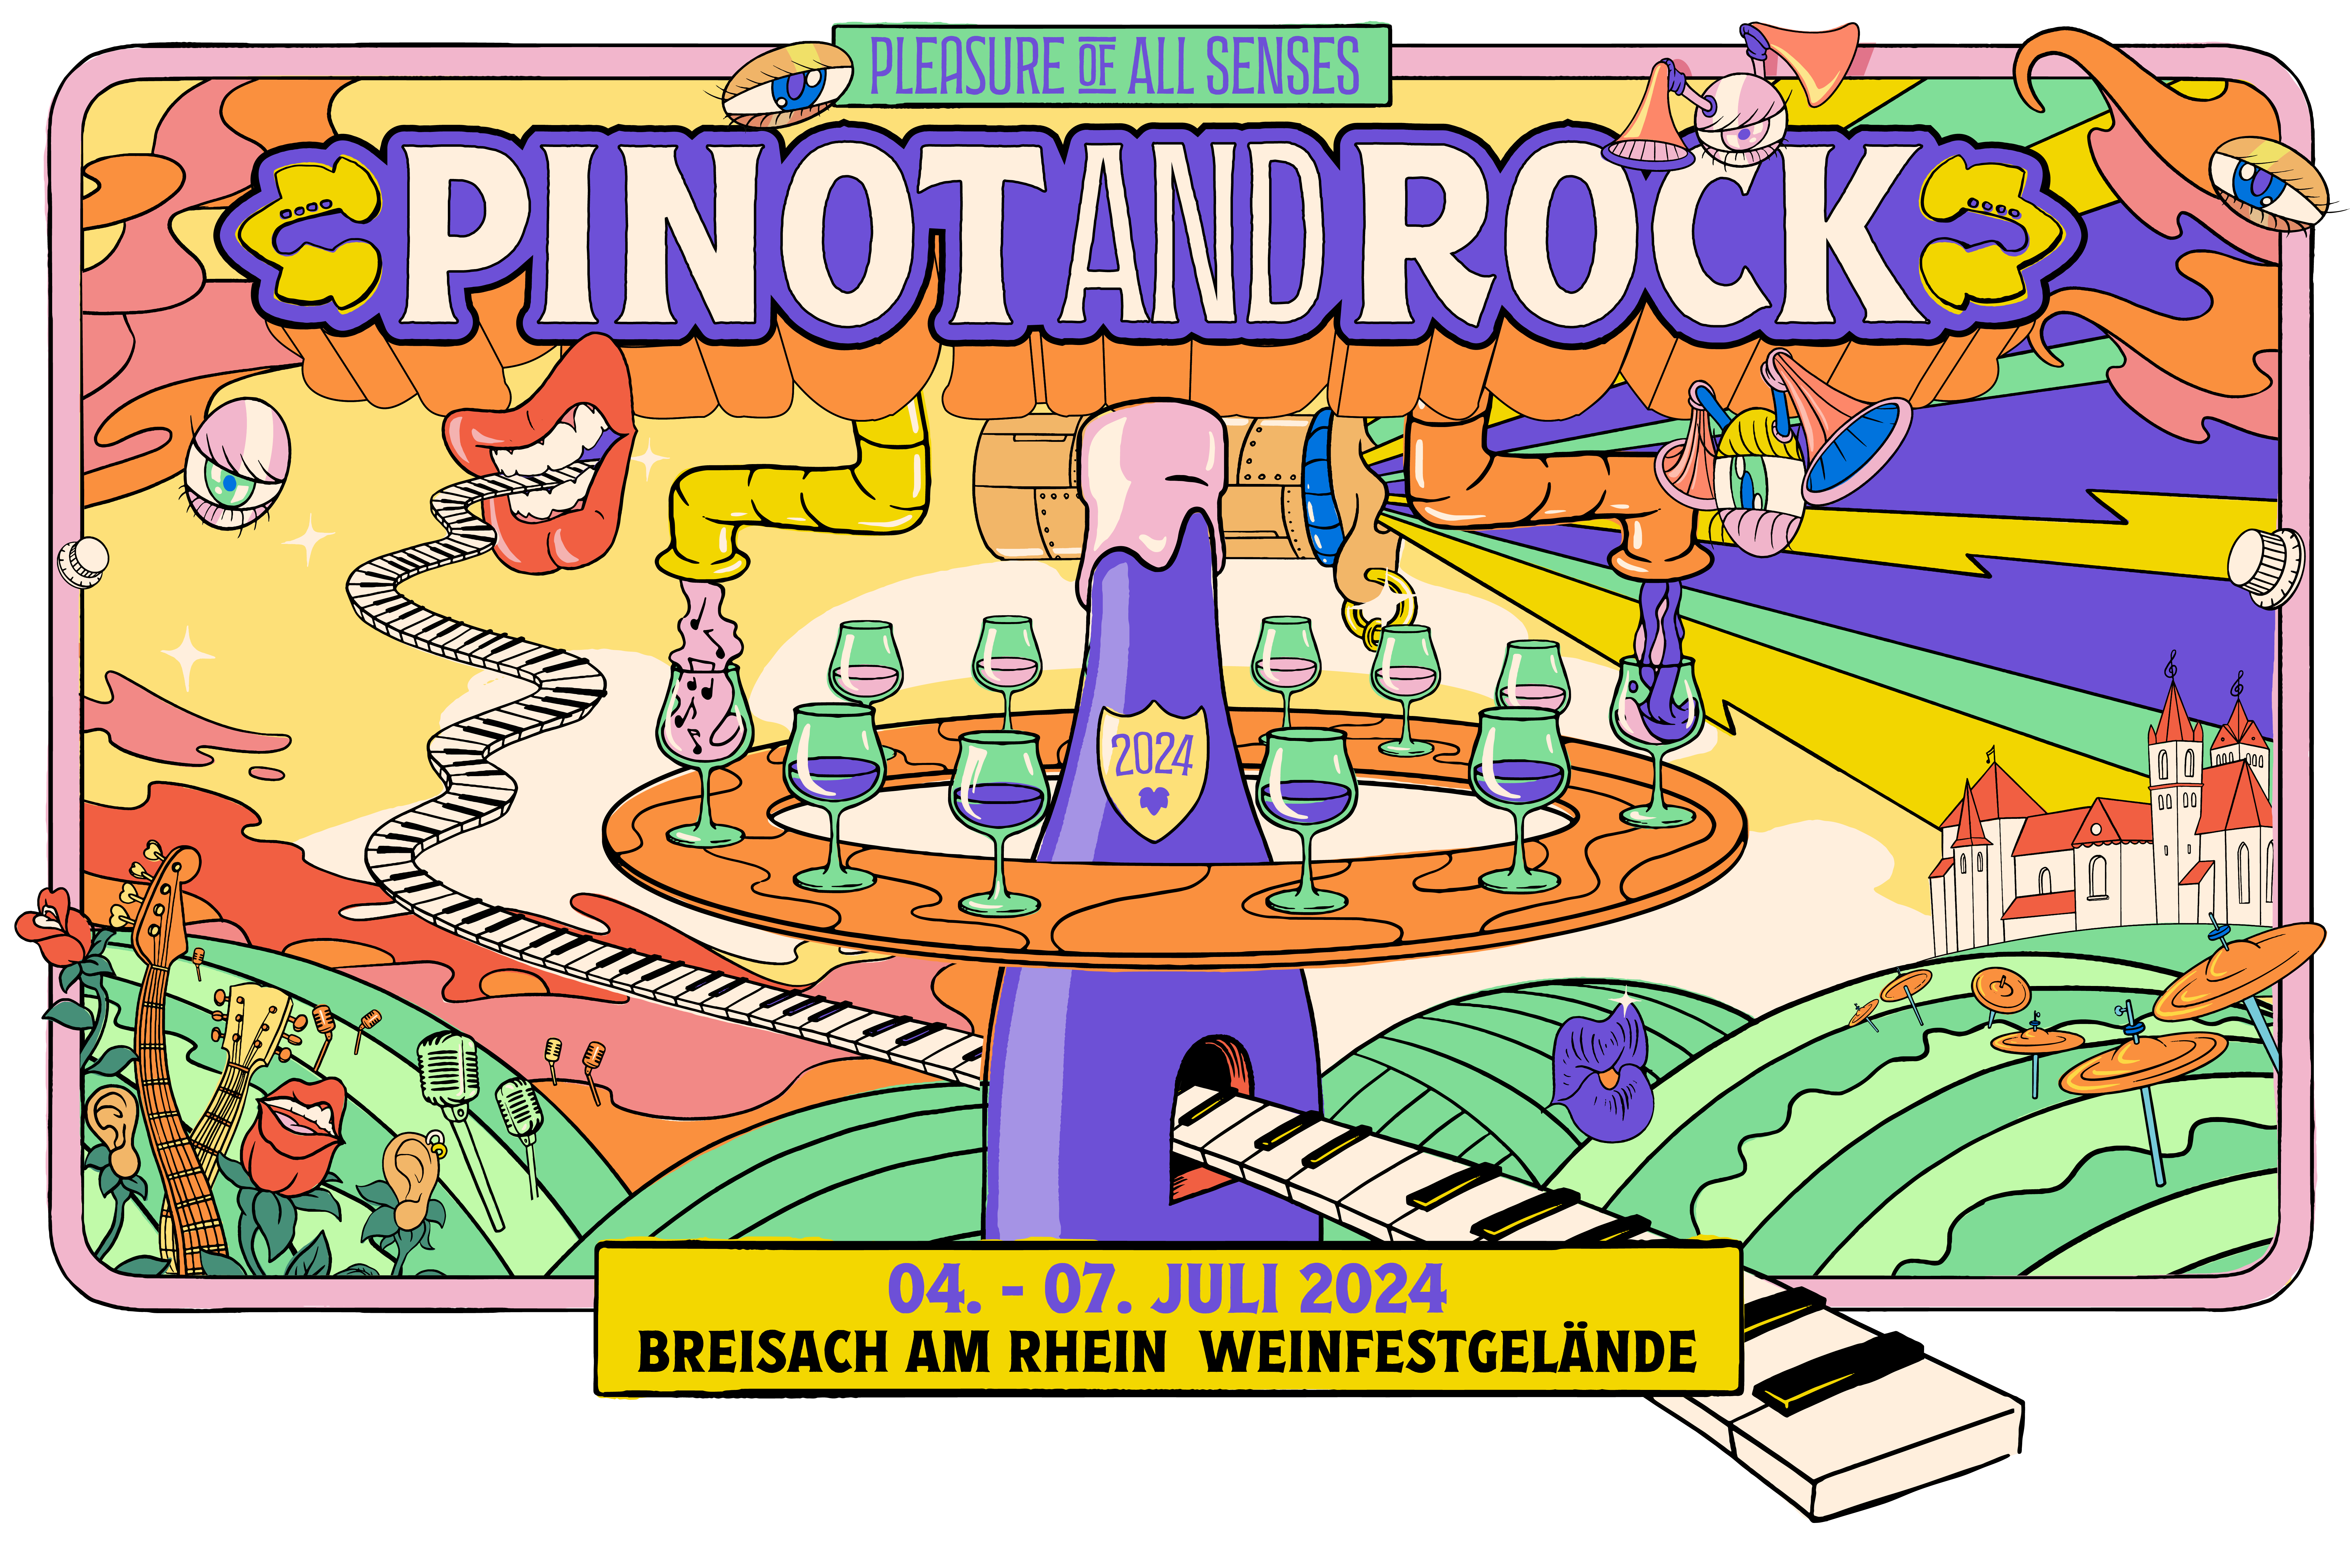 Pinot and Rock im Fernsehen